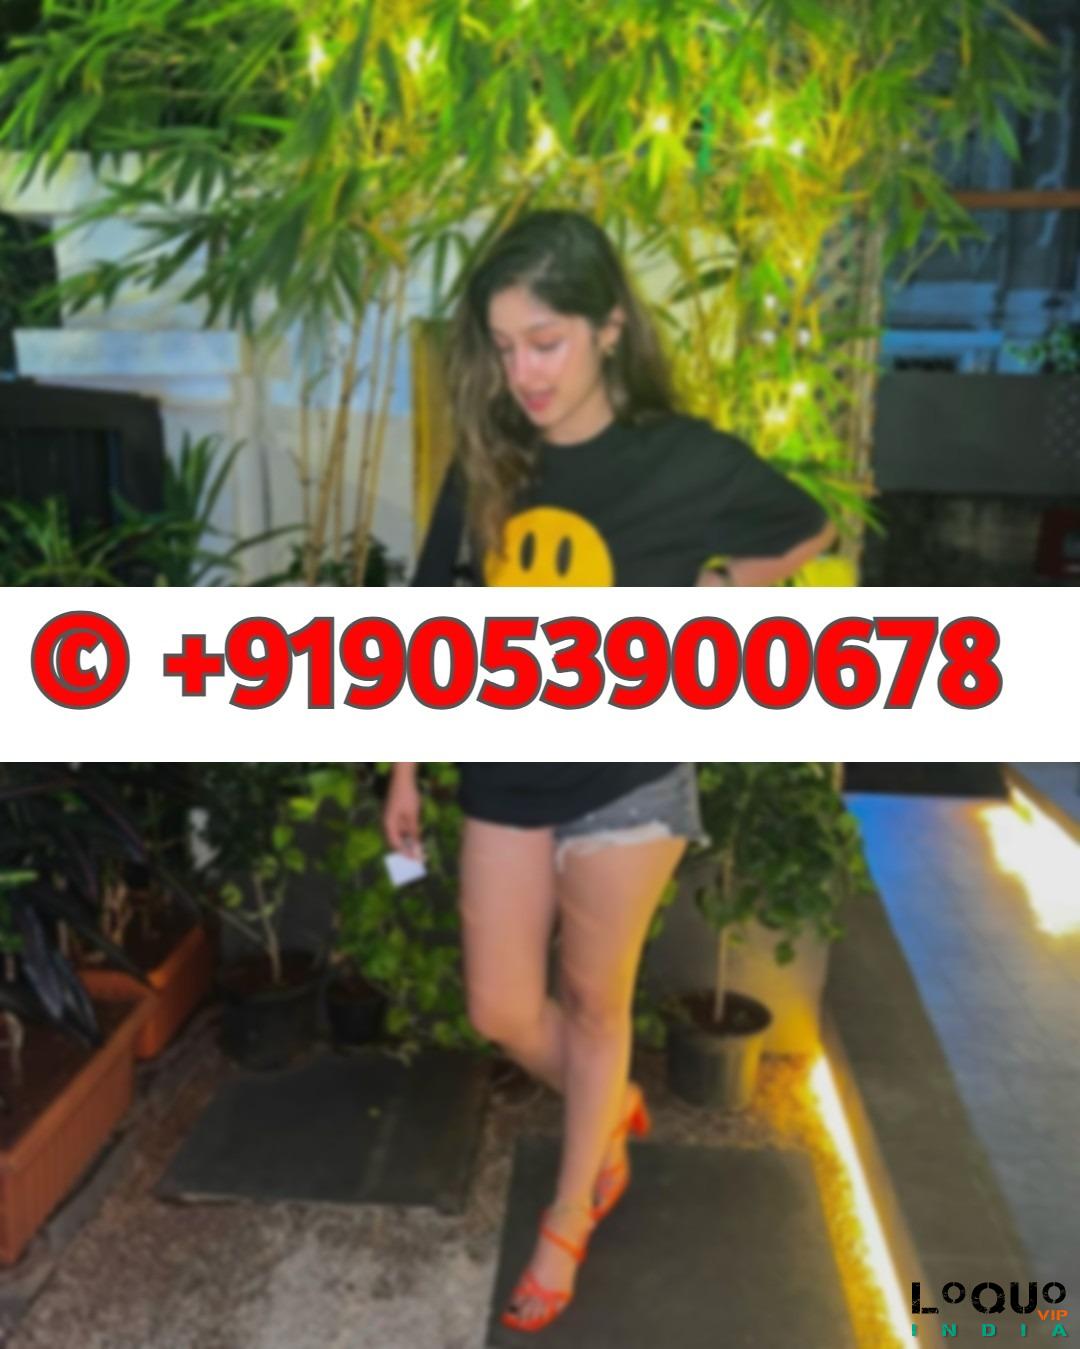 Call Girls Chandigarh: Foreign Call girls in Chandigarh 9053900678 ChandigarH Call girls